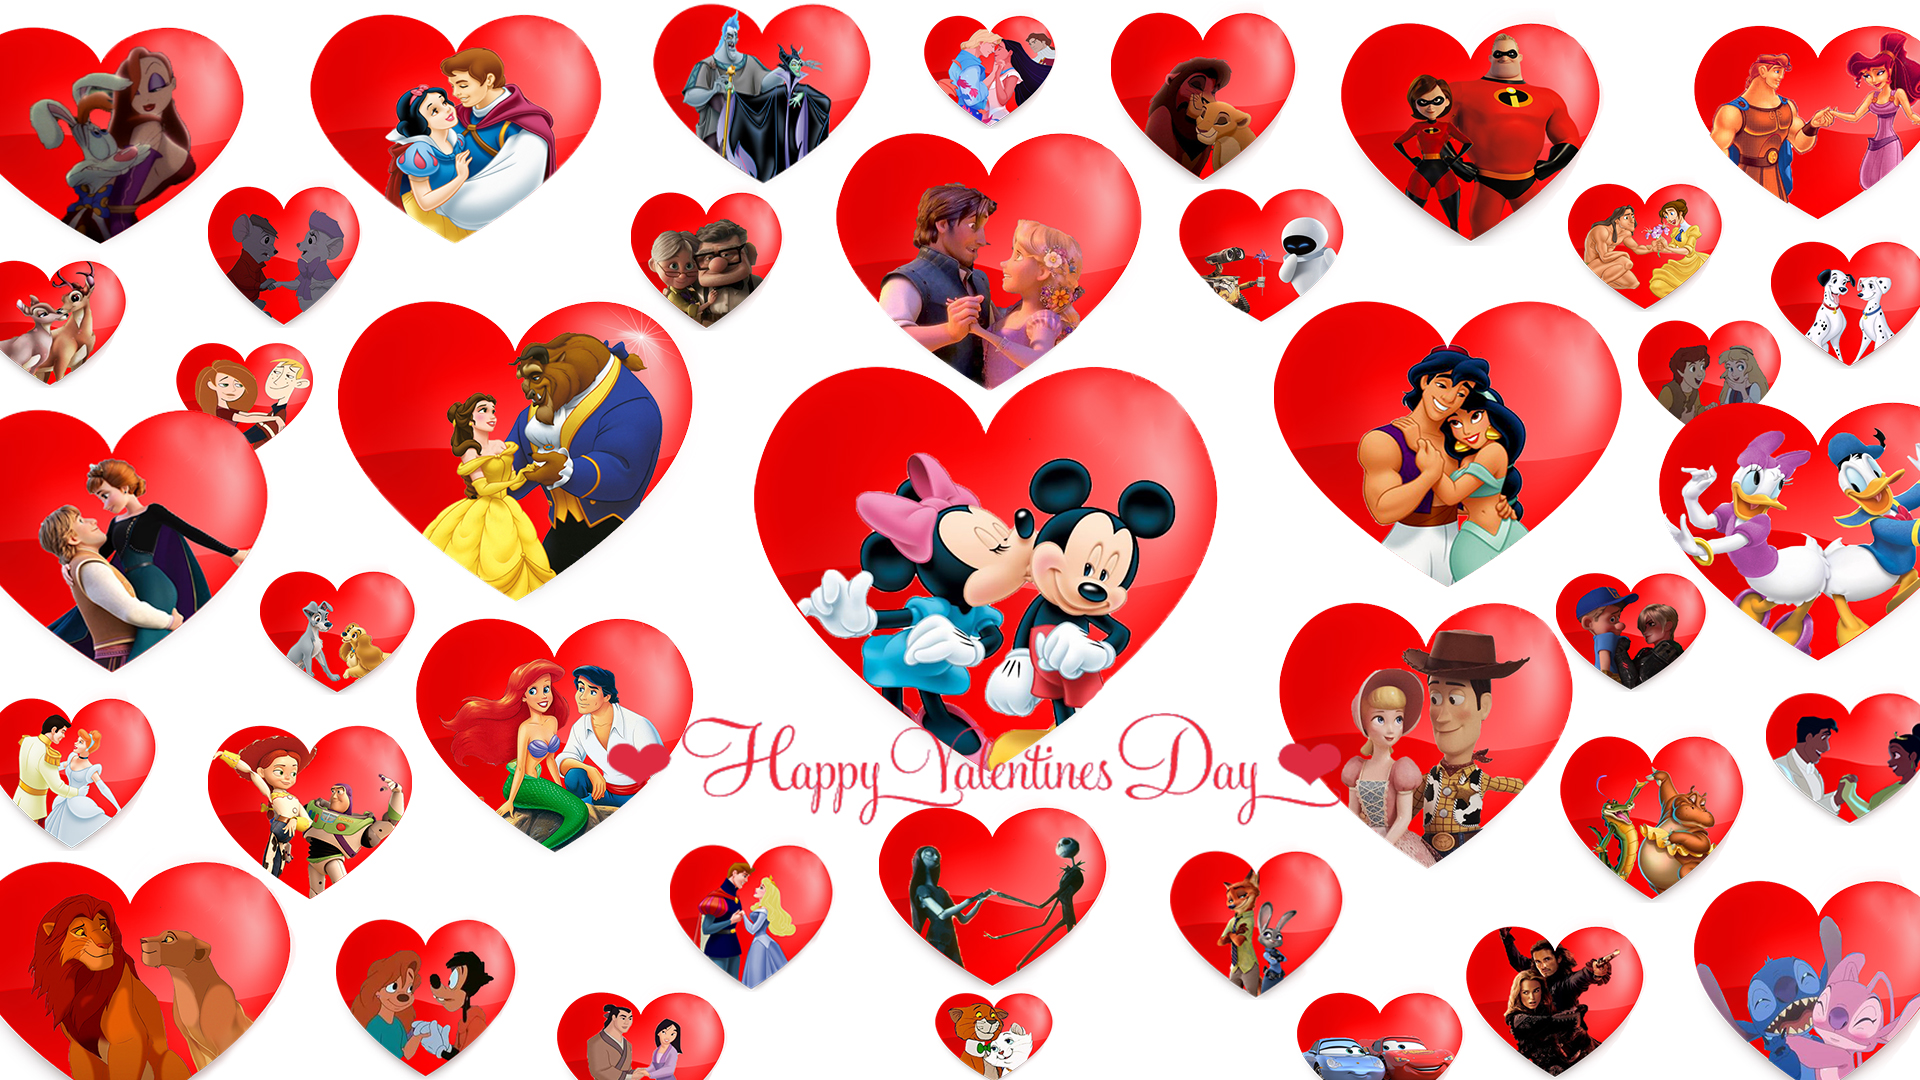 Disney Couples: Valentine's Day Wallpaper by Thekingblader995 on DeviantArt